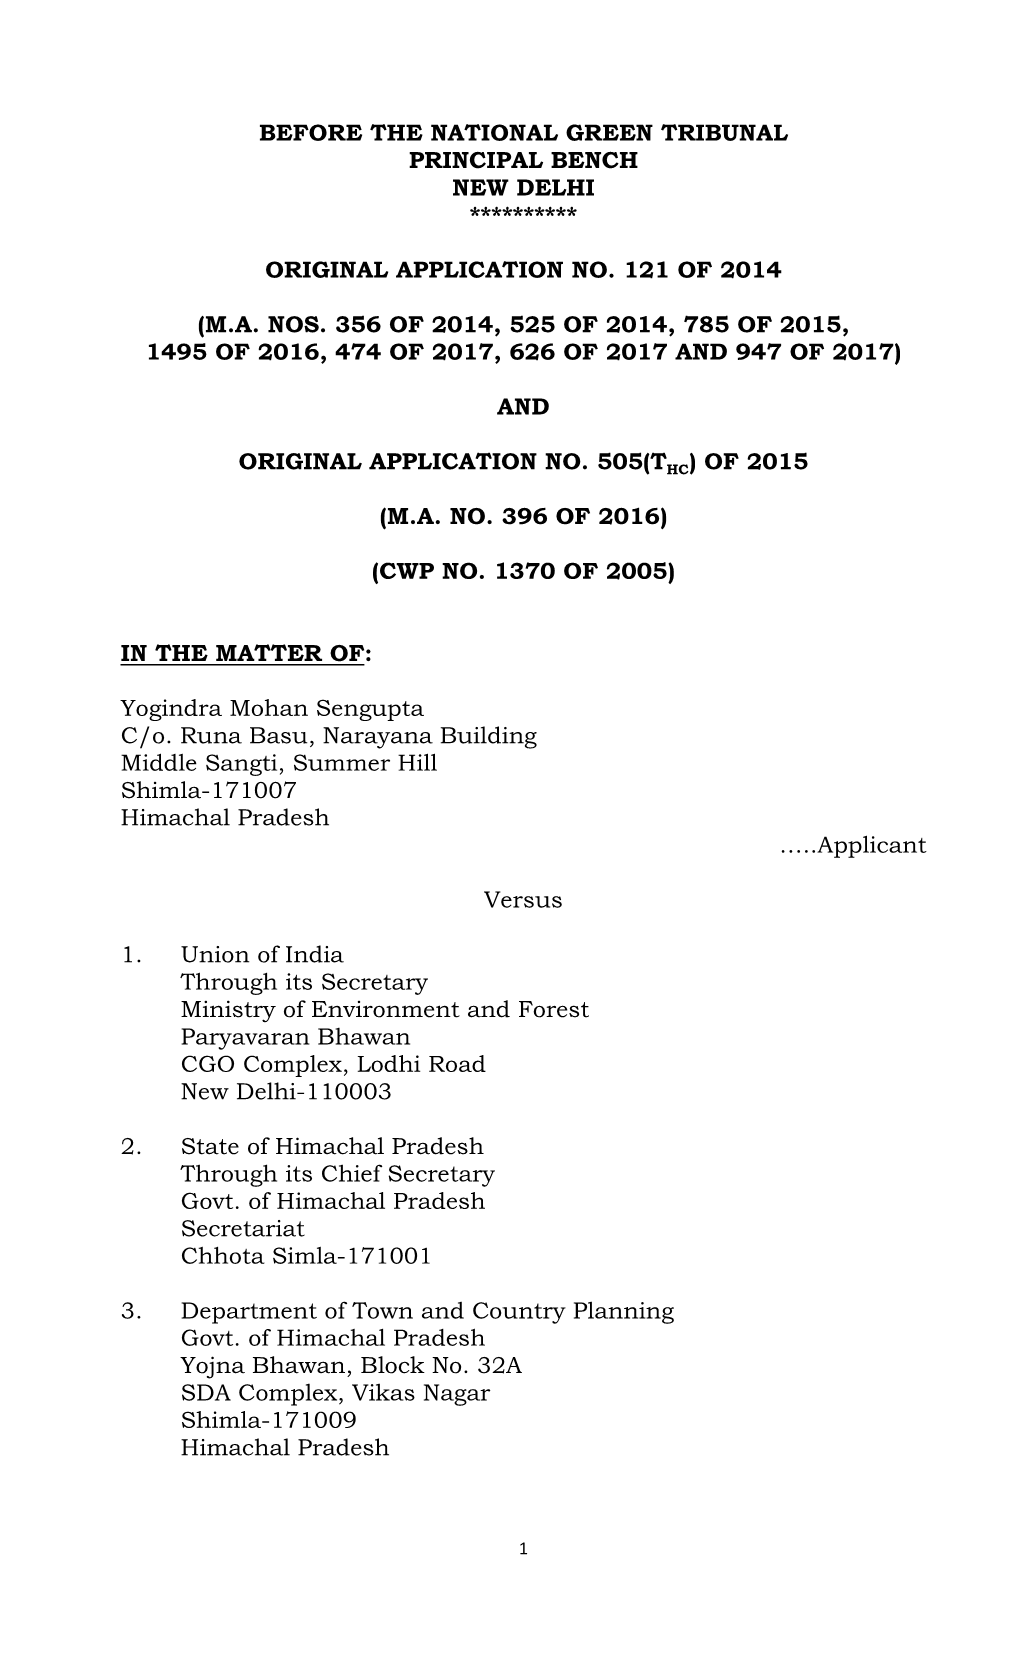 Before the National Green Tribunal Principal Bench New Delhi ********** Original Application No. 121 of 2014